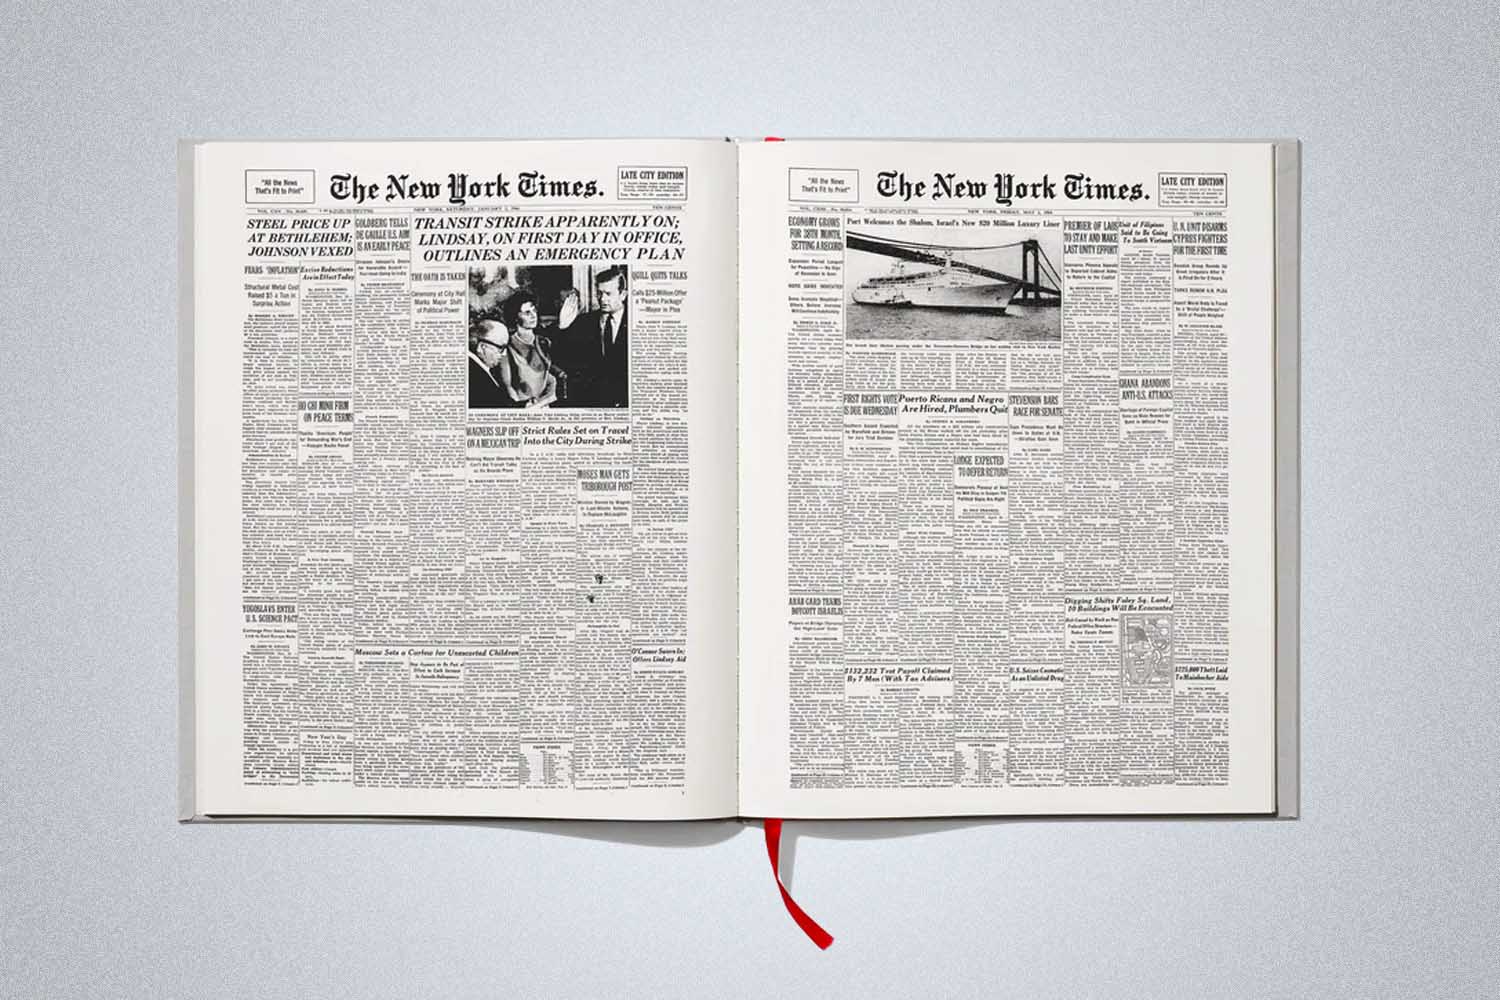 New York Times Birthday Book